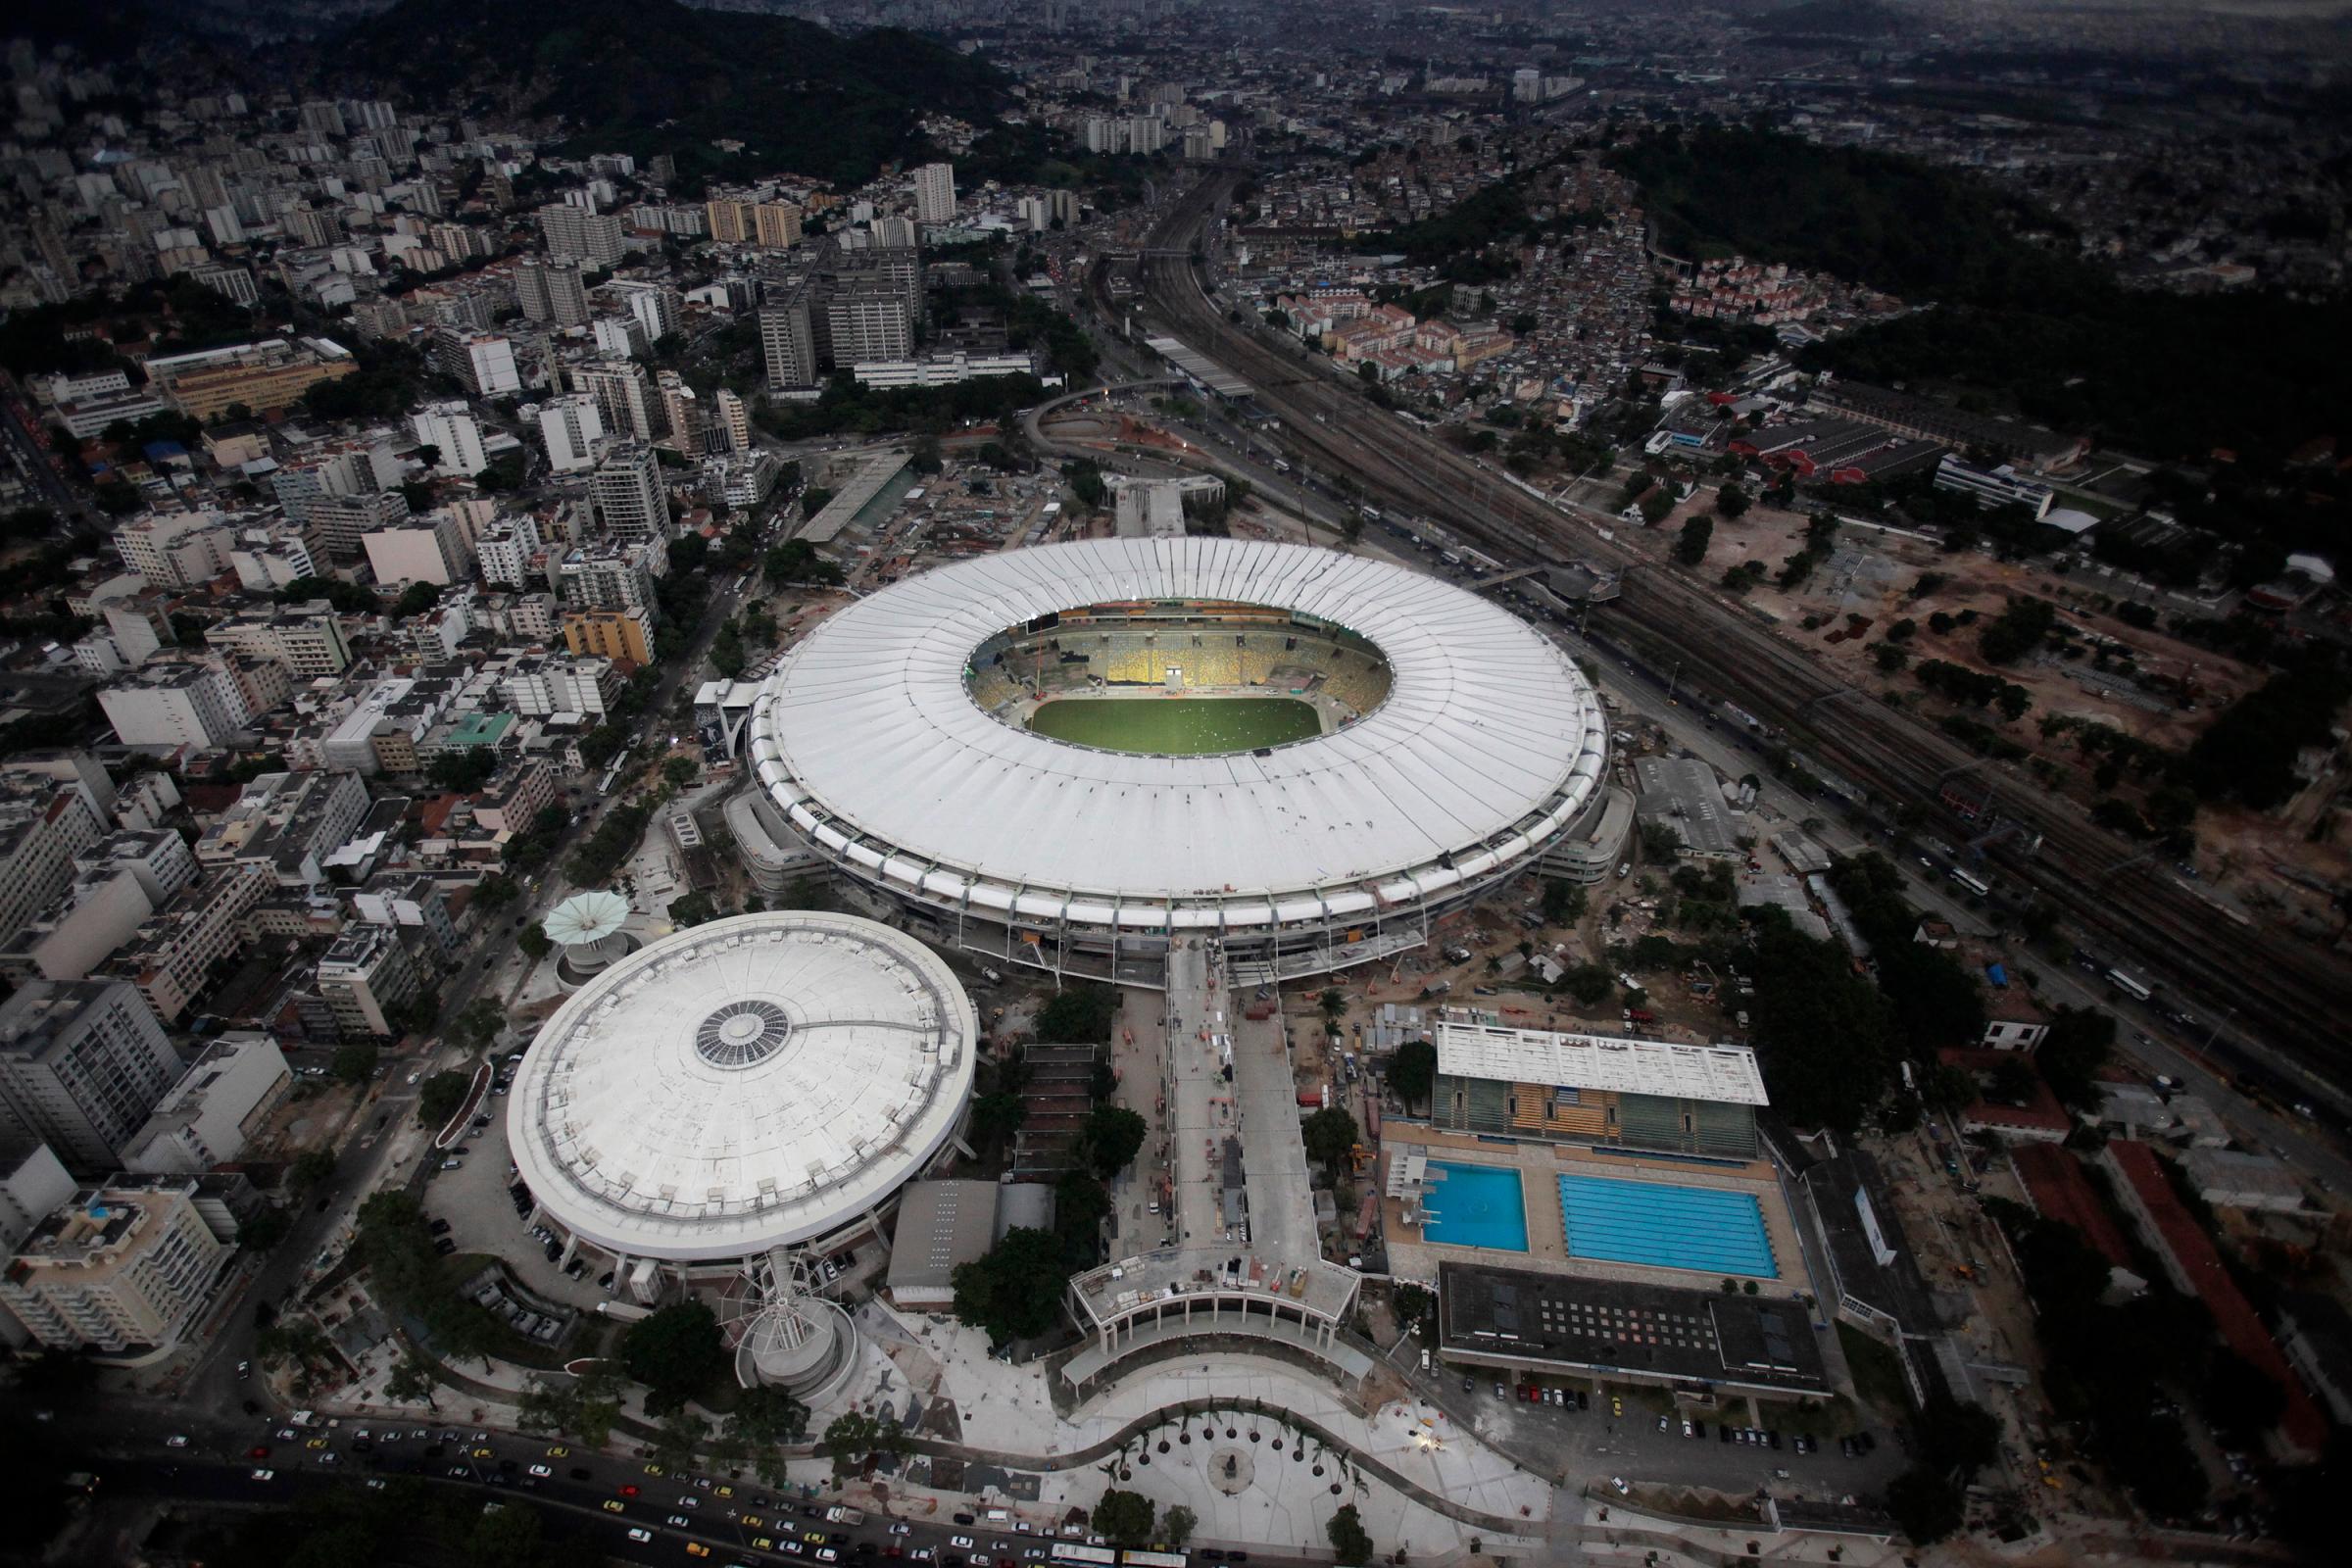 Estadio Do Maracana